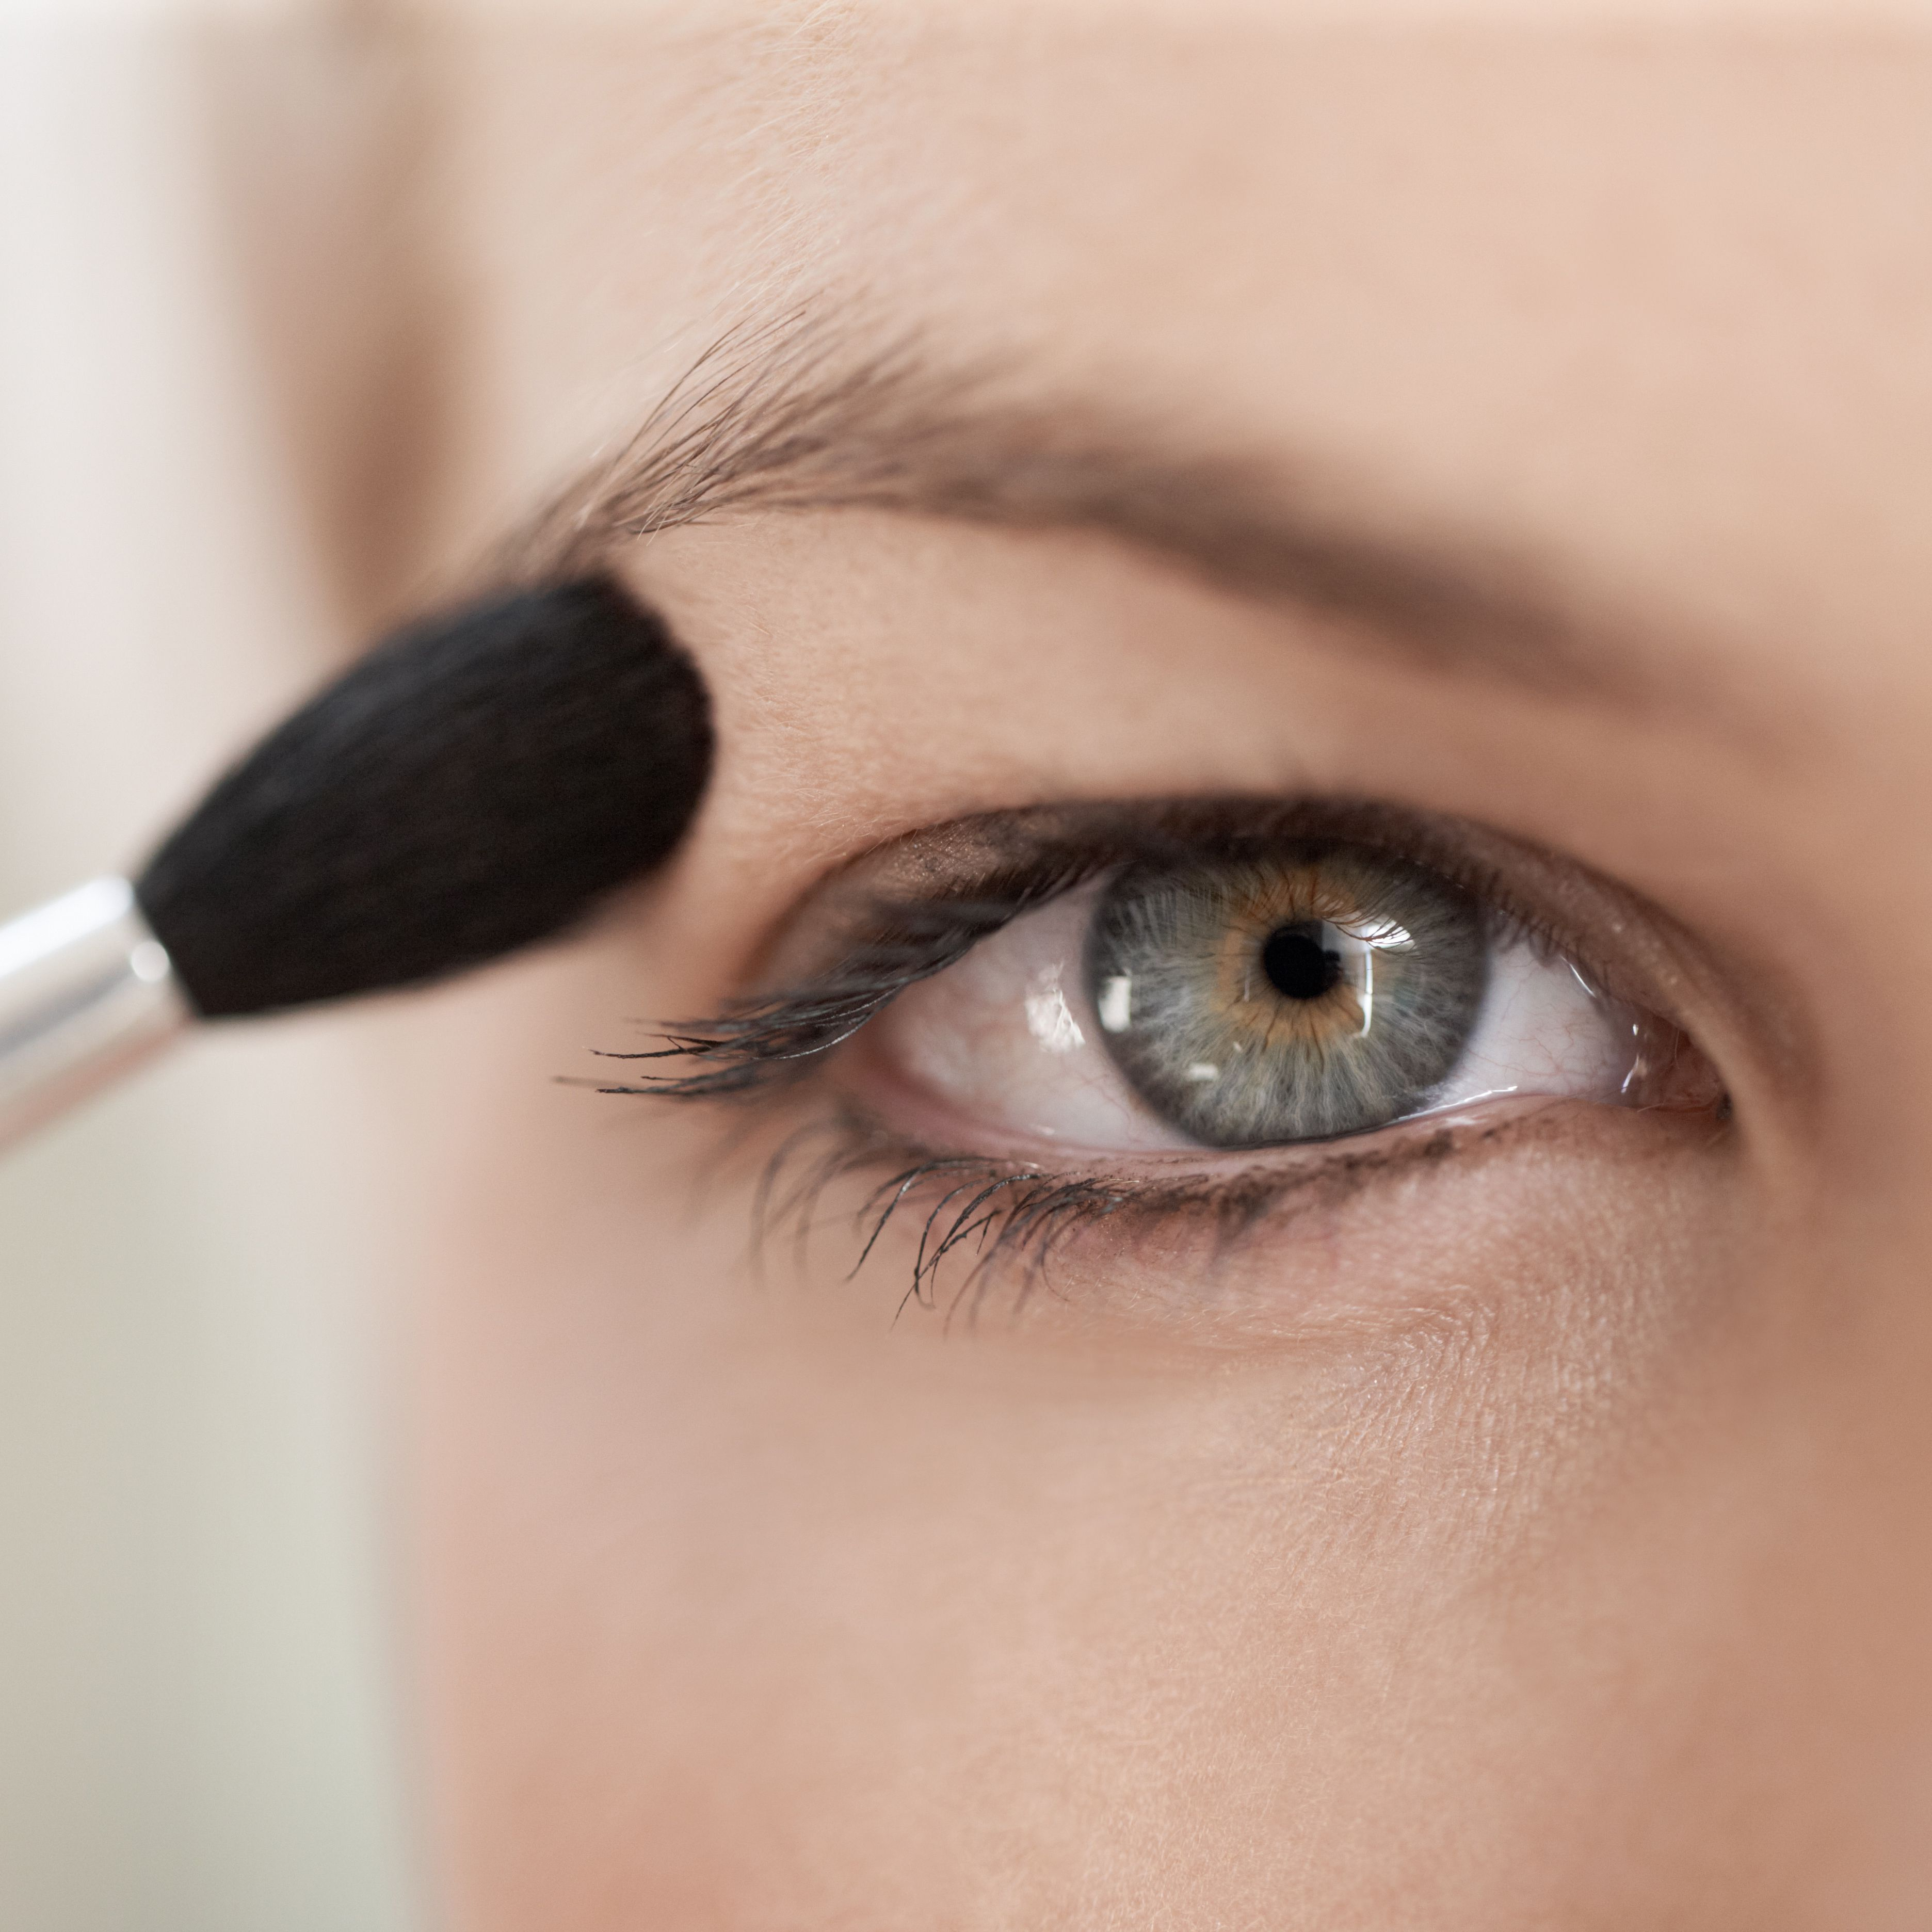 Makeup Ideas For Dark Brown Eyes Makeup Tricks For Hooded Eyes Hooded Eyes Makeup Tips And Tricks